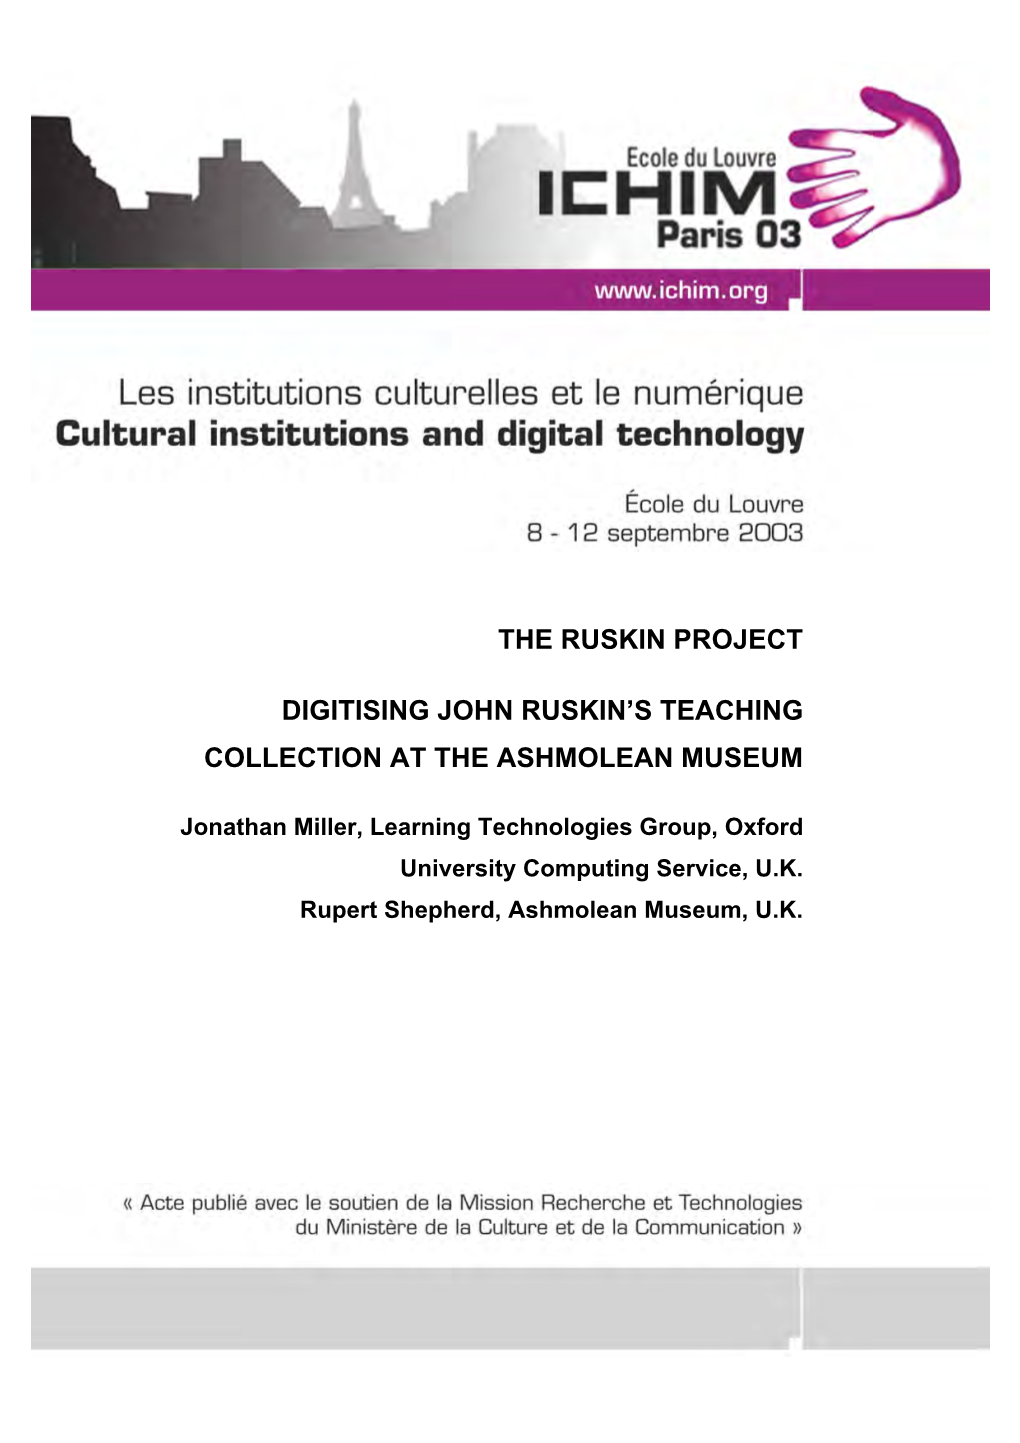 The Ruskin Project Digitising John Ruskin's Teaching